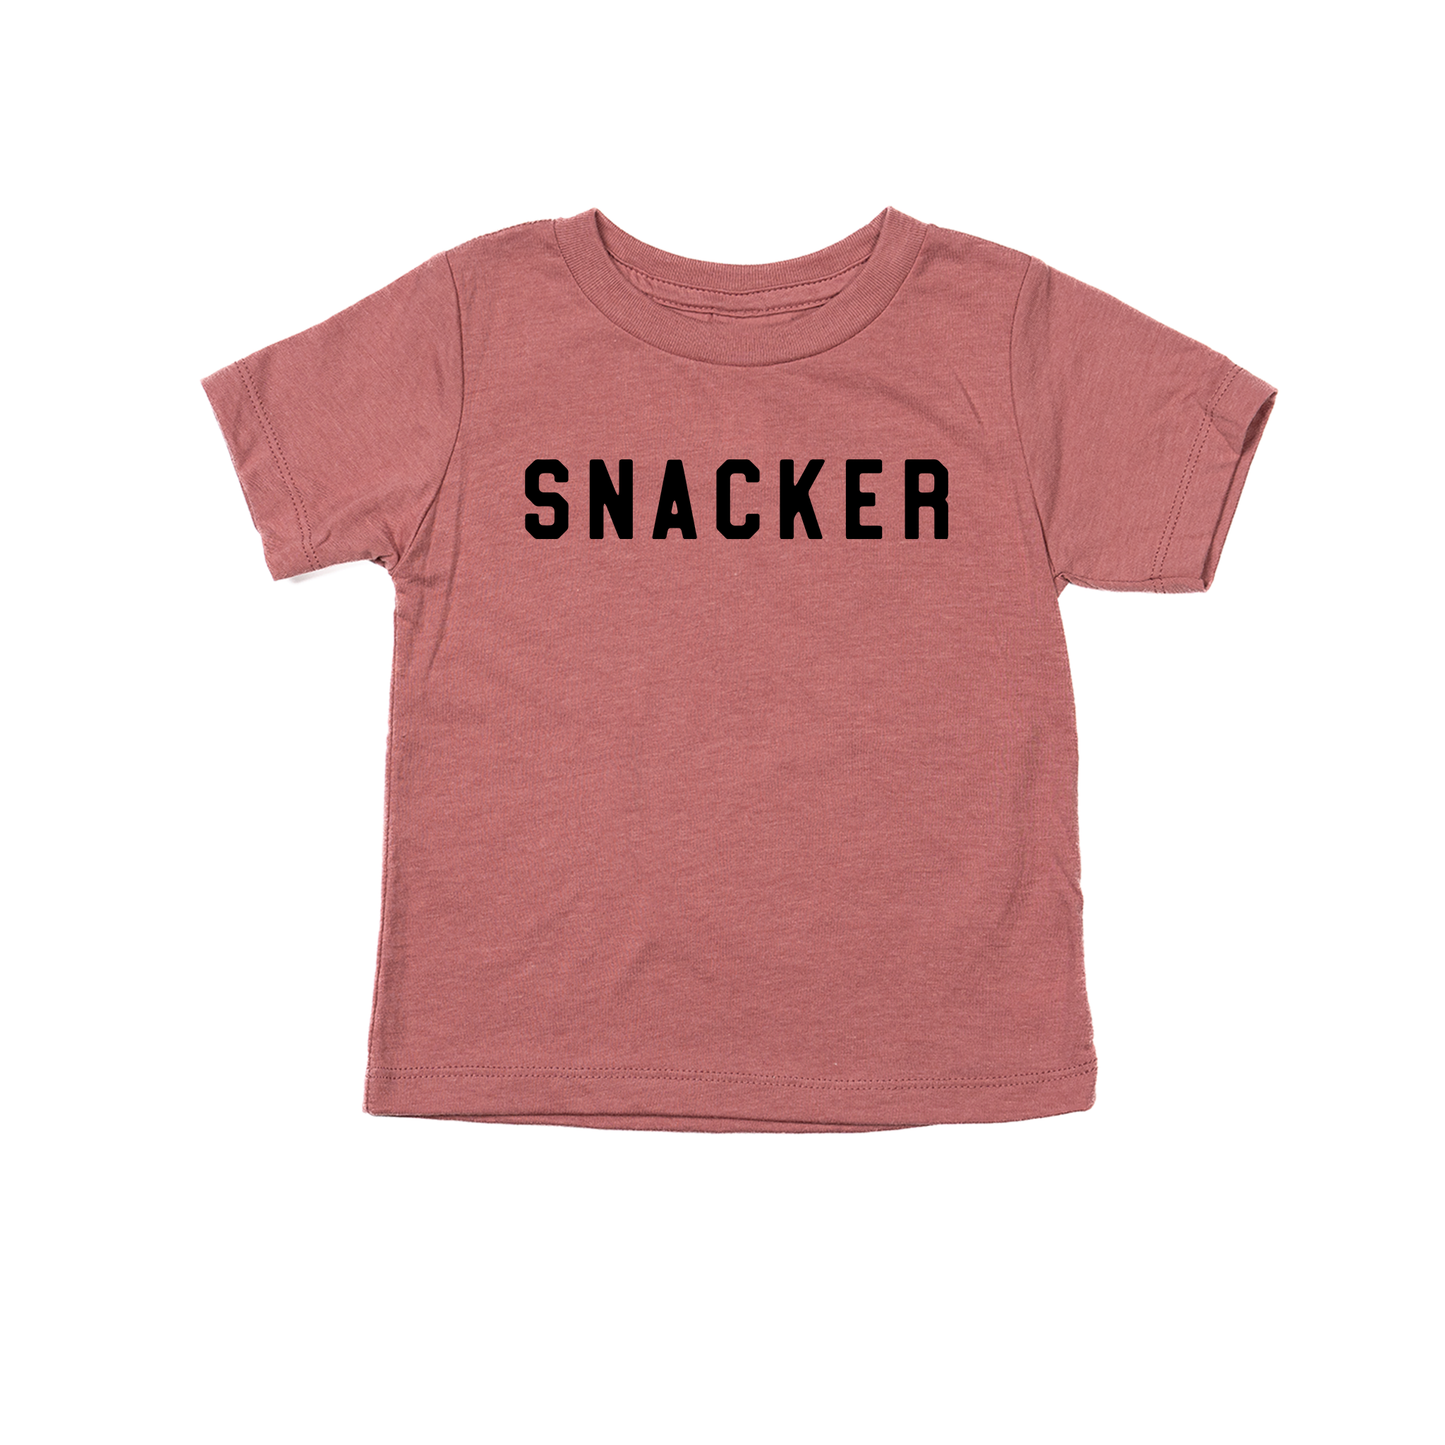 Snacker - Kids Tee (Mauve)